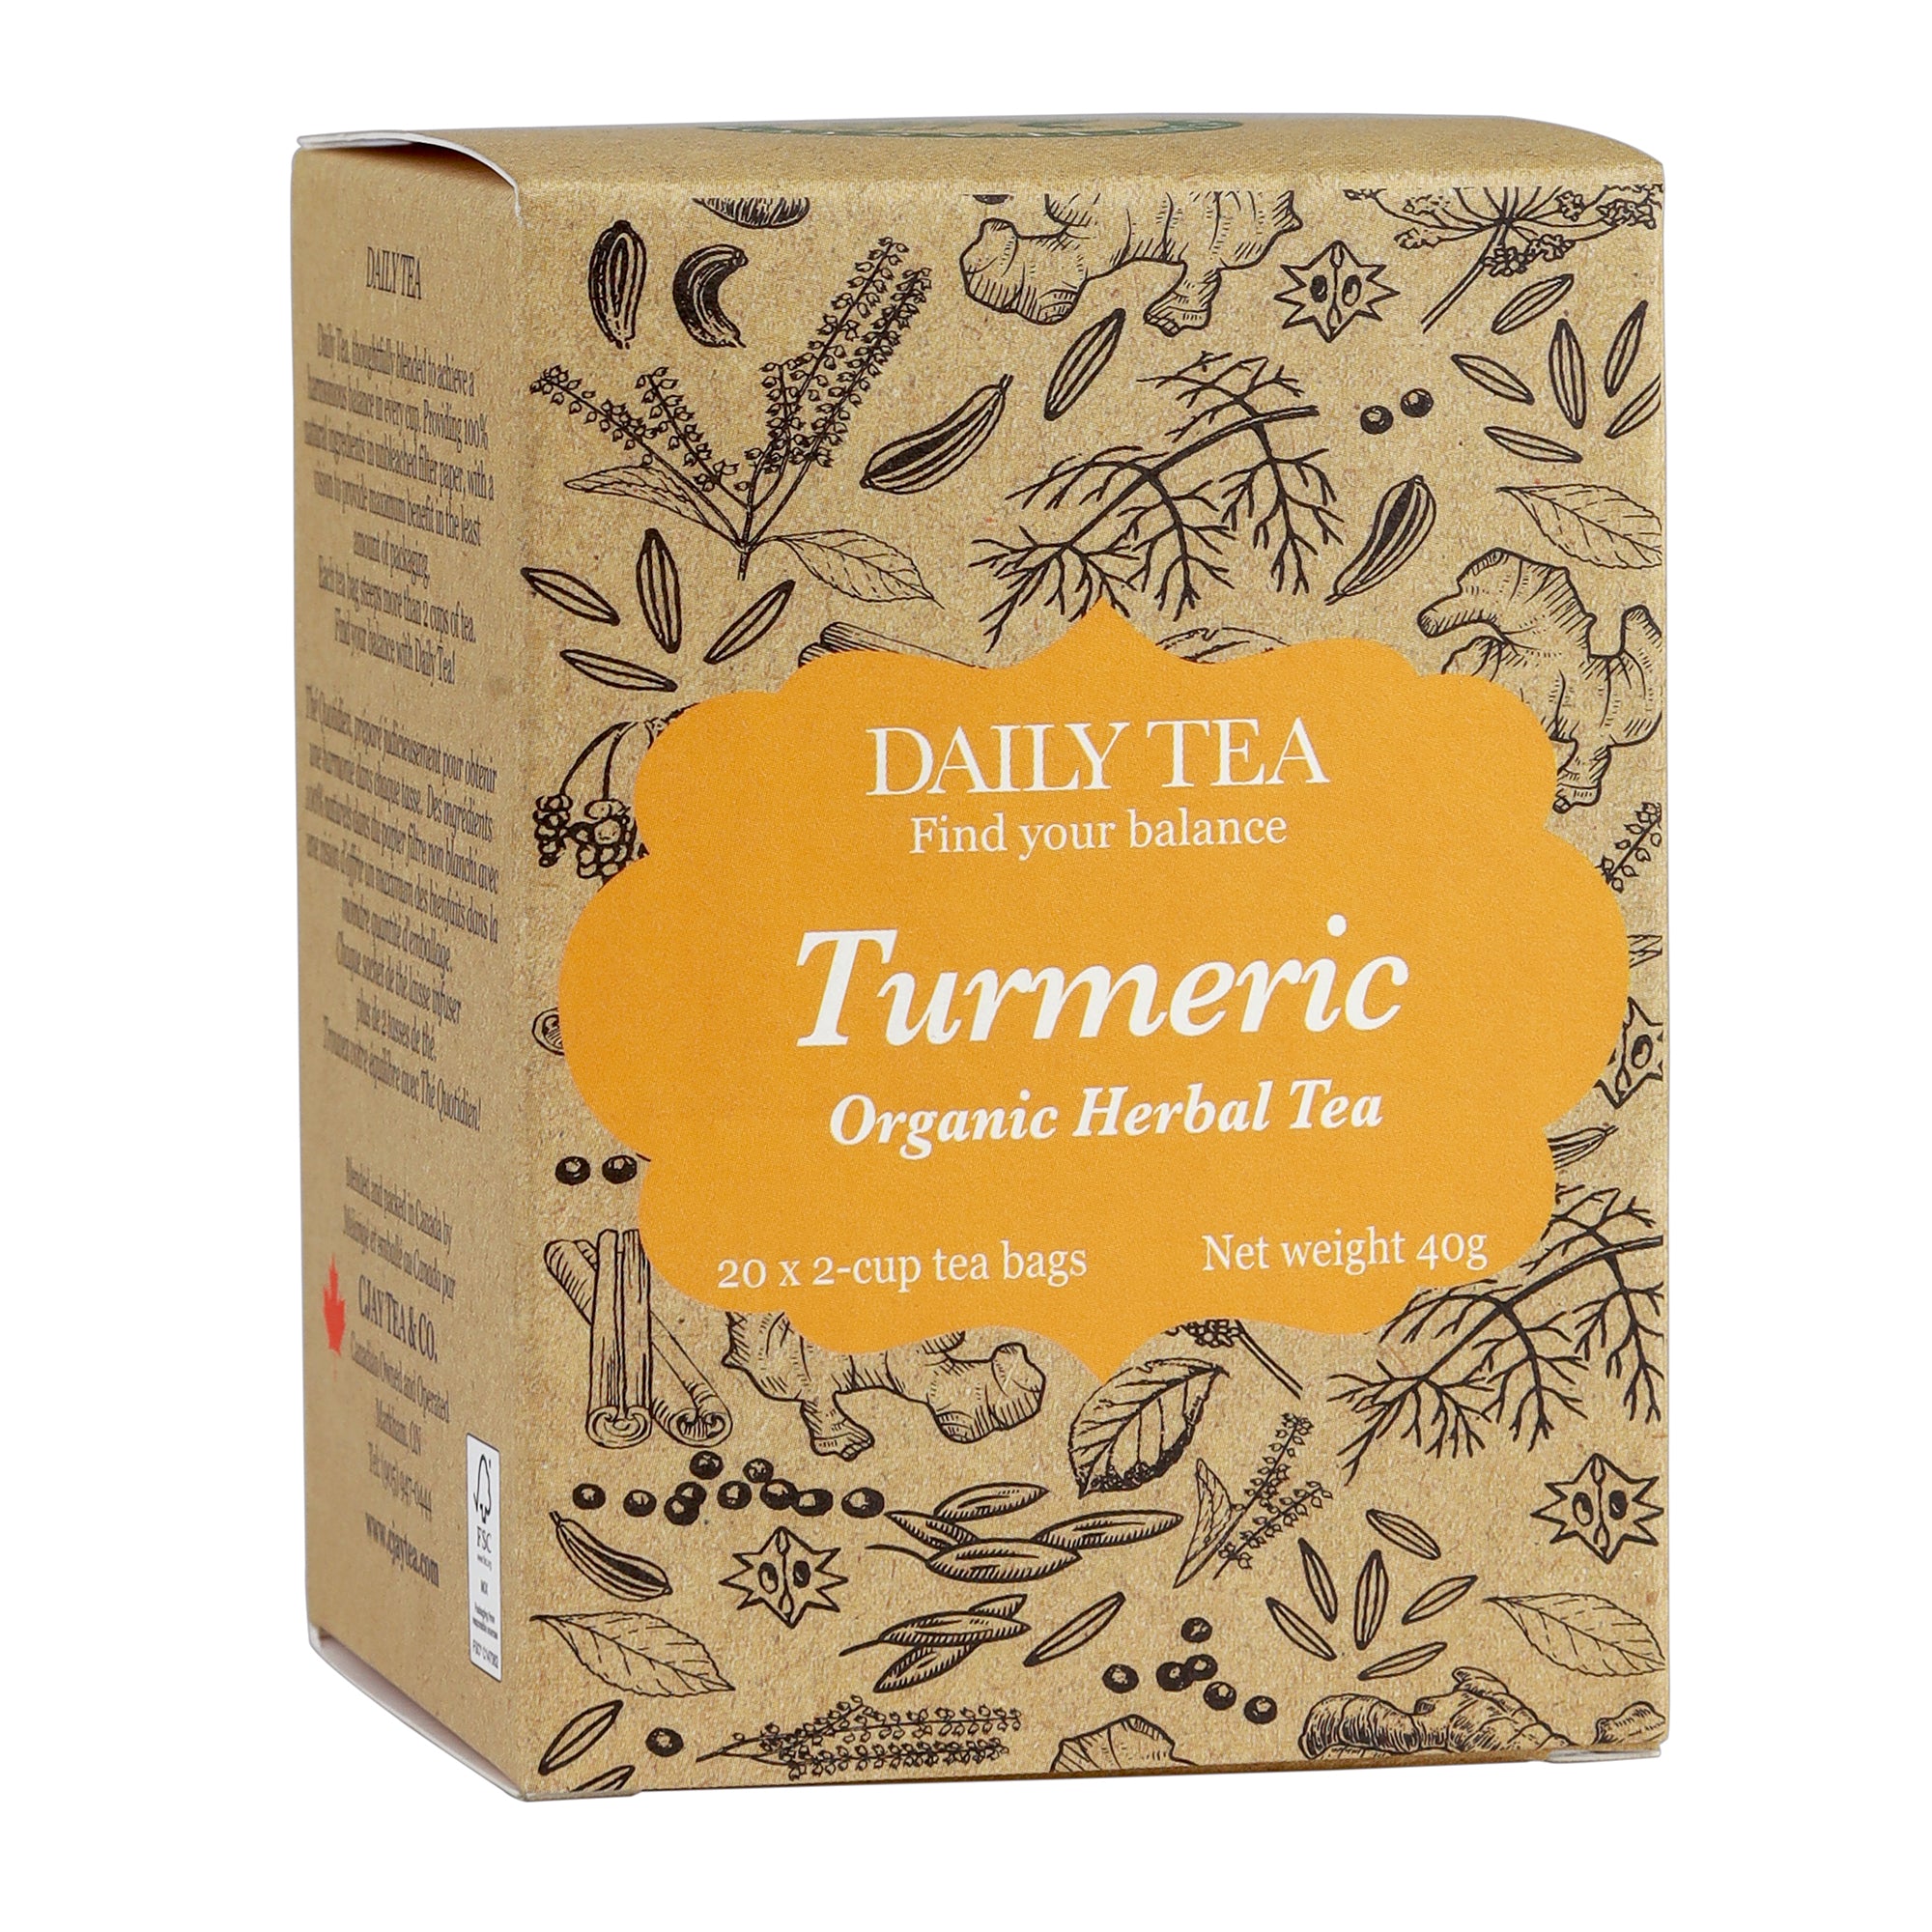 Turmeric Tea